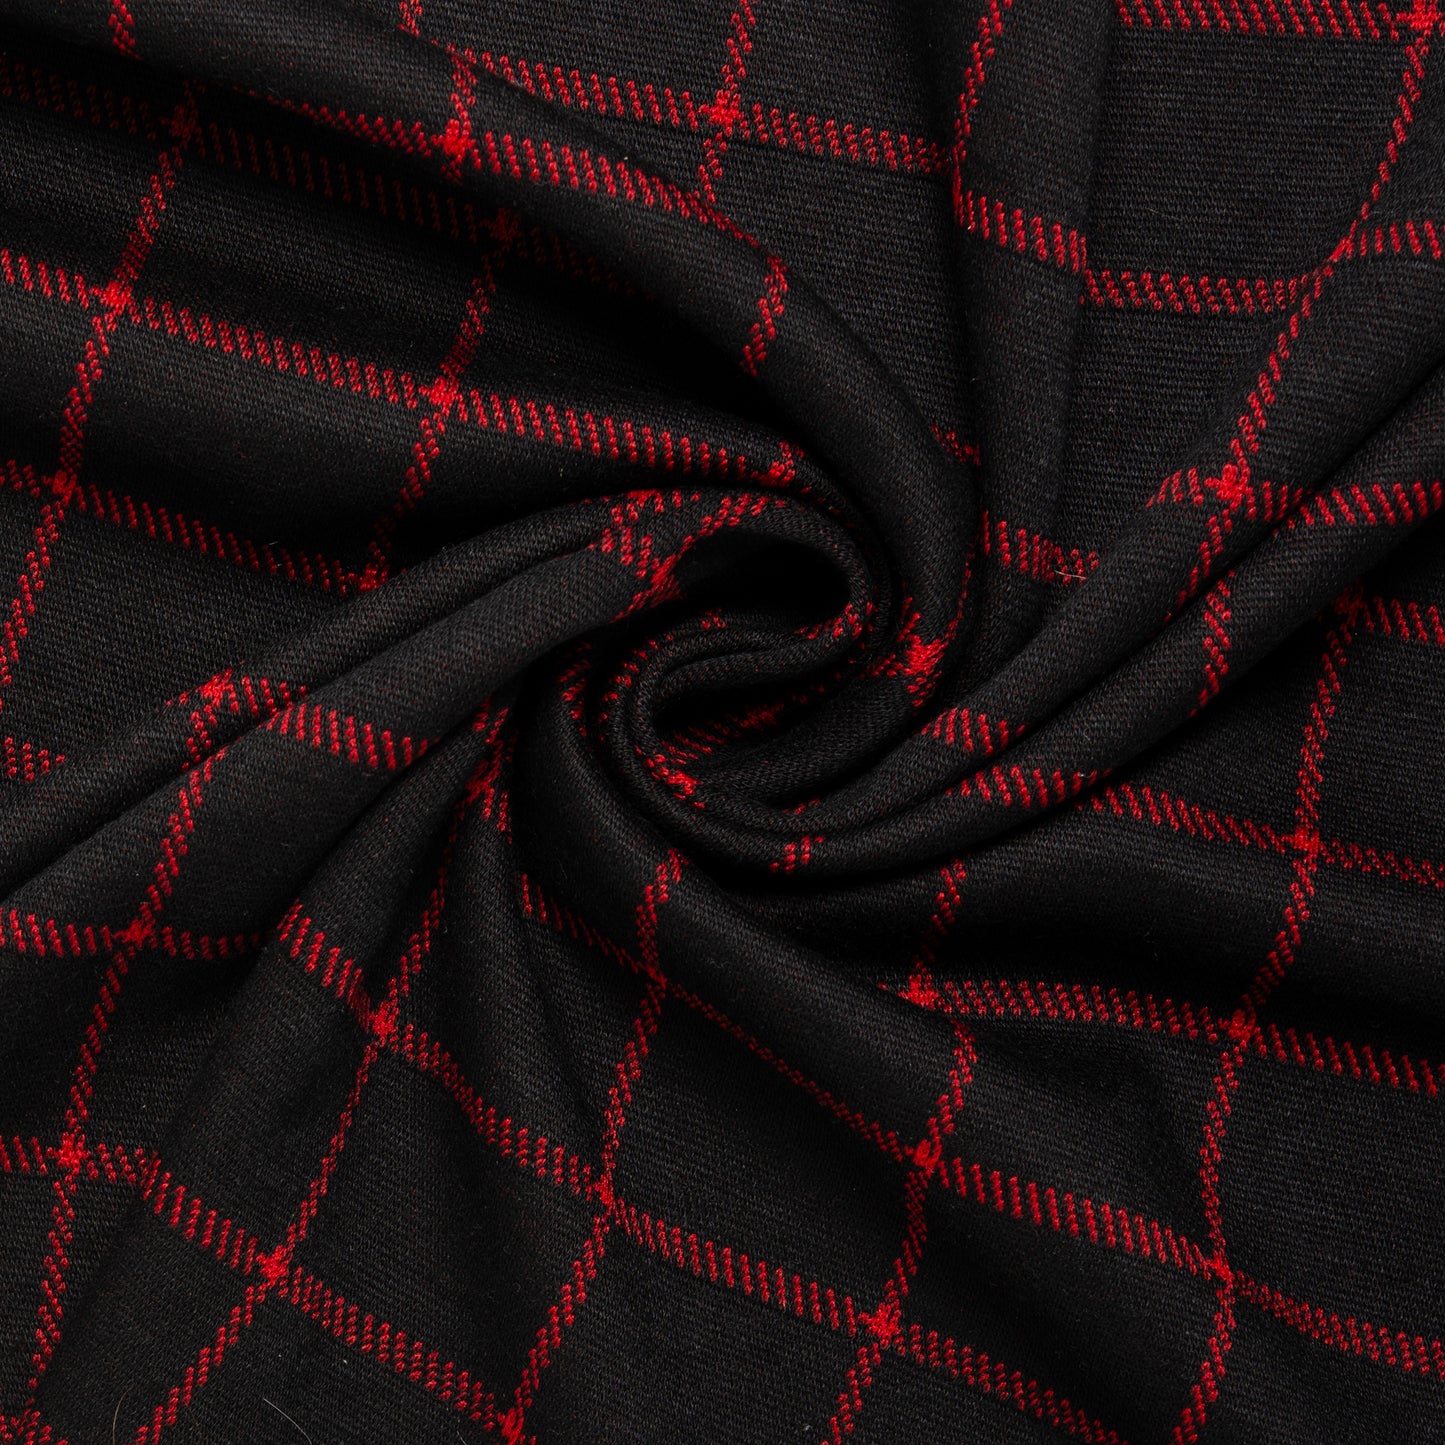 Sweater knit - ARBIA - Checks - Black / Red